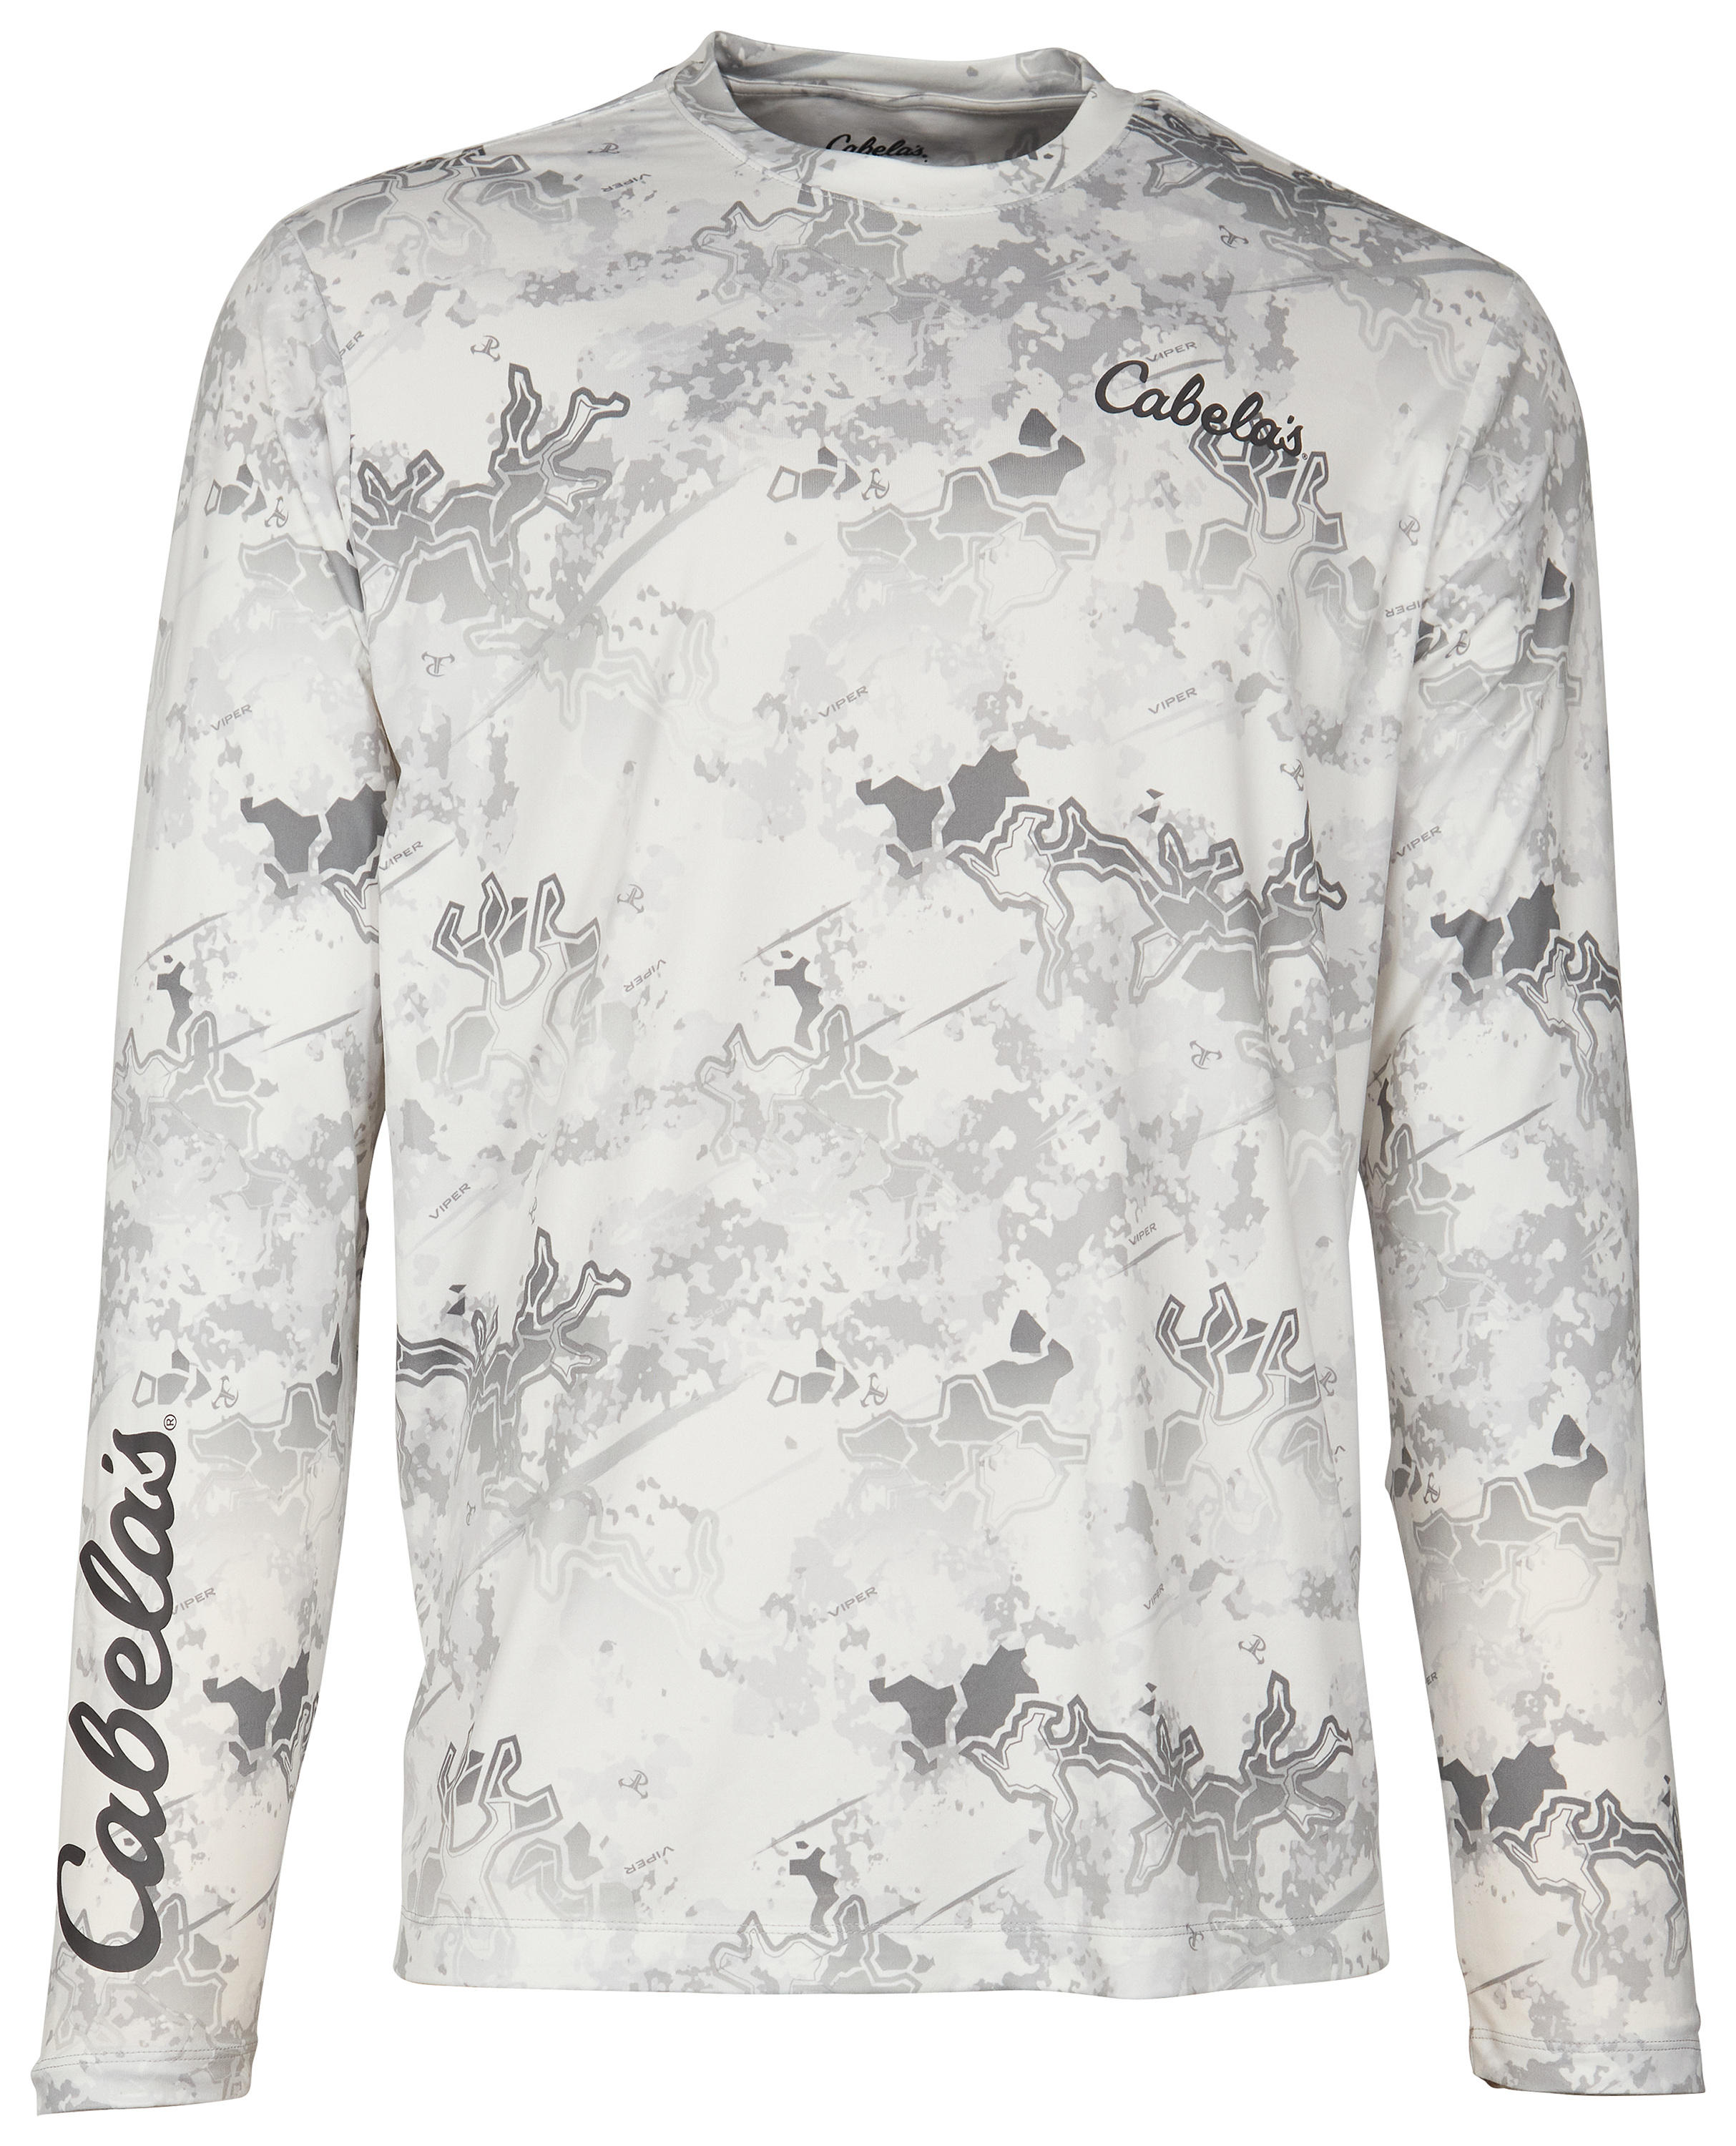 Cabela's Long-Sleeve Performance Shirt for Men - TrueTimber Viper Aqua - XL